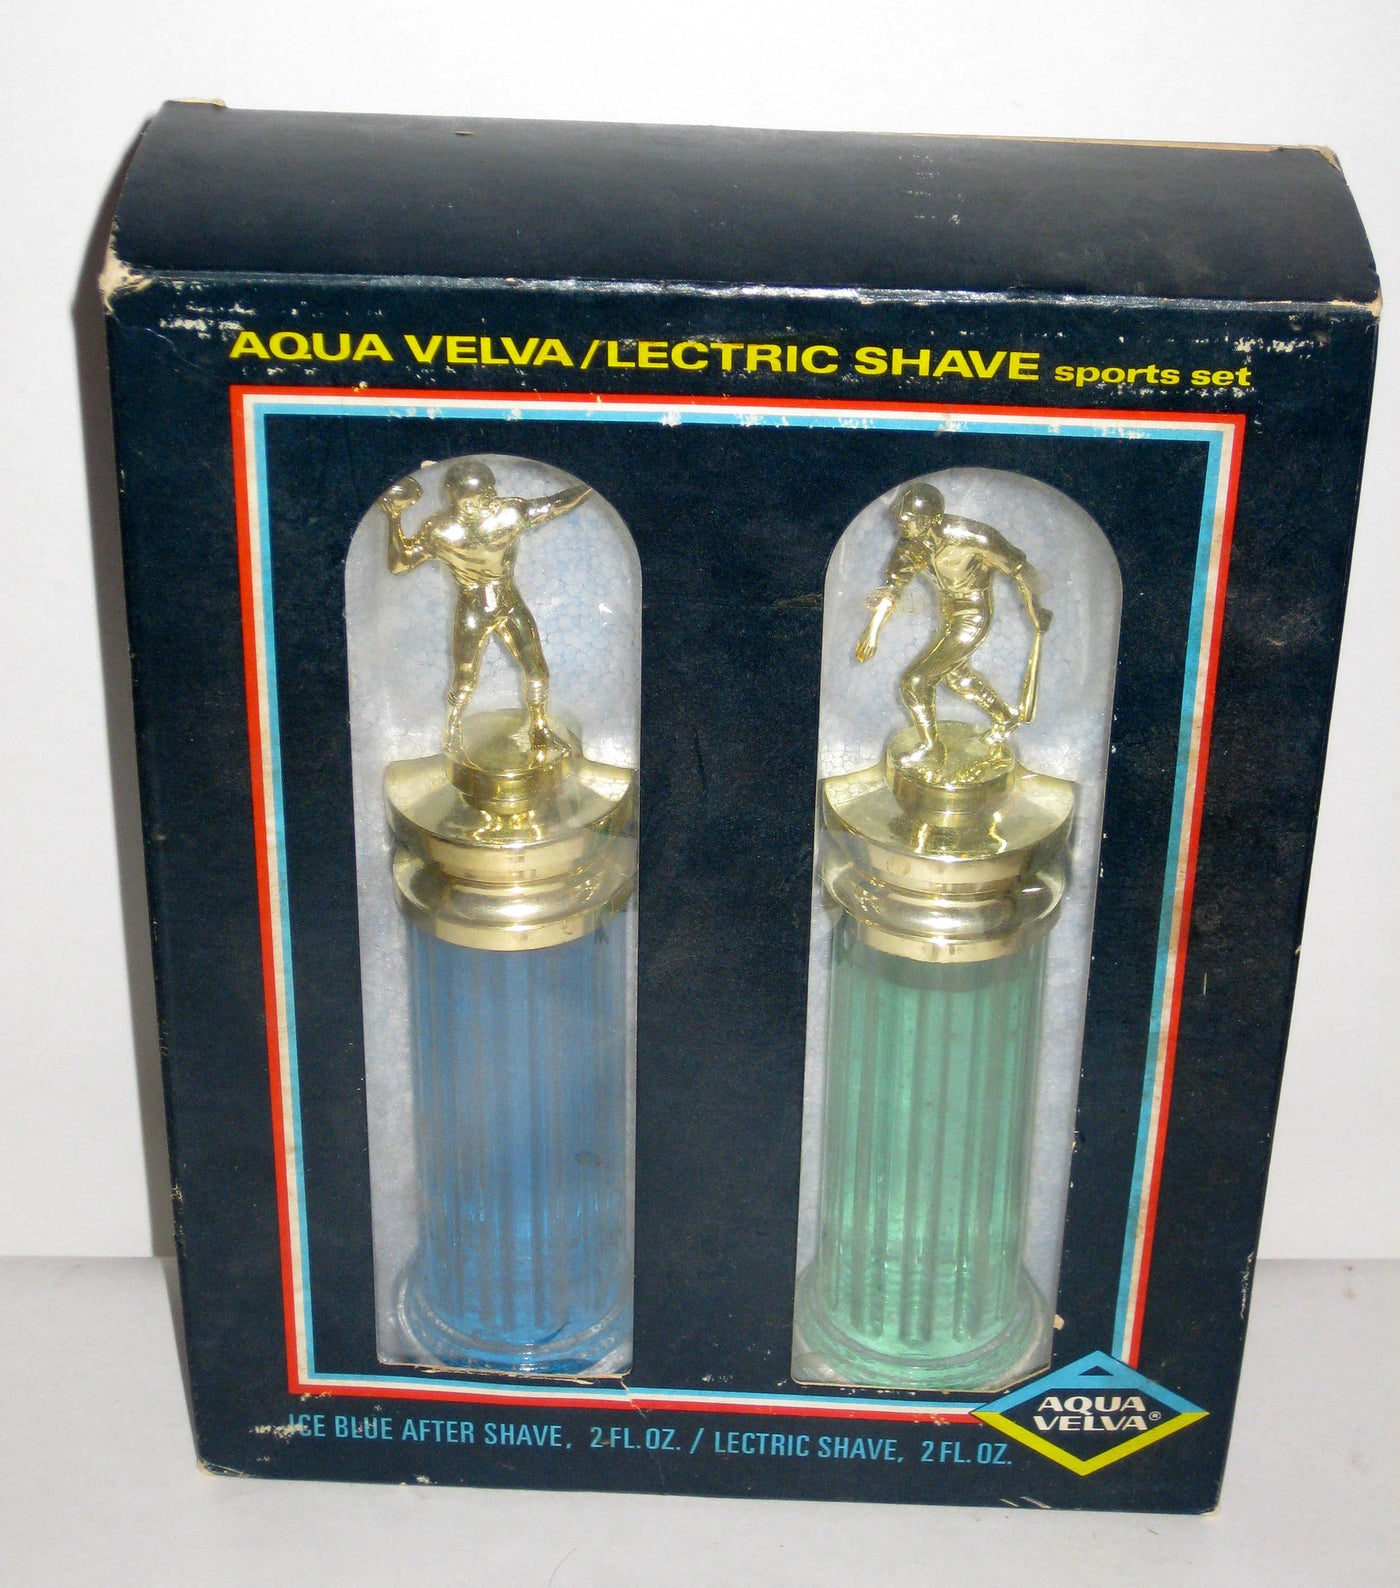 Aqua Velva Lectric Shave Sports Set